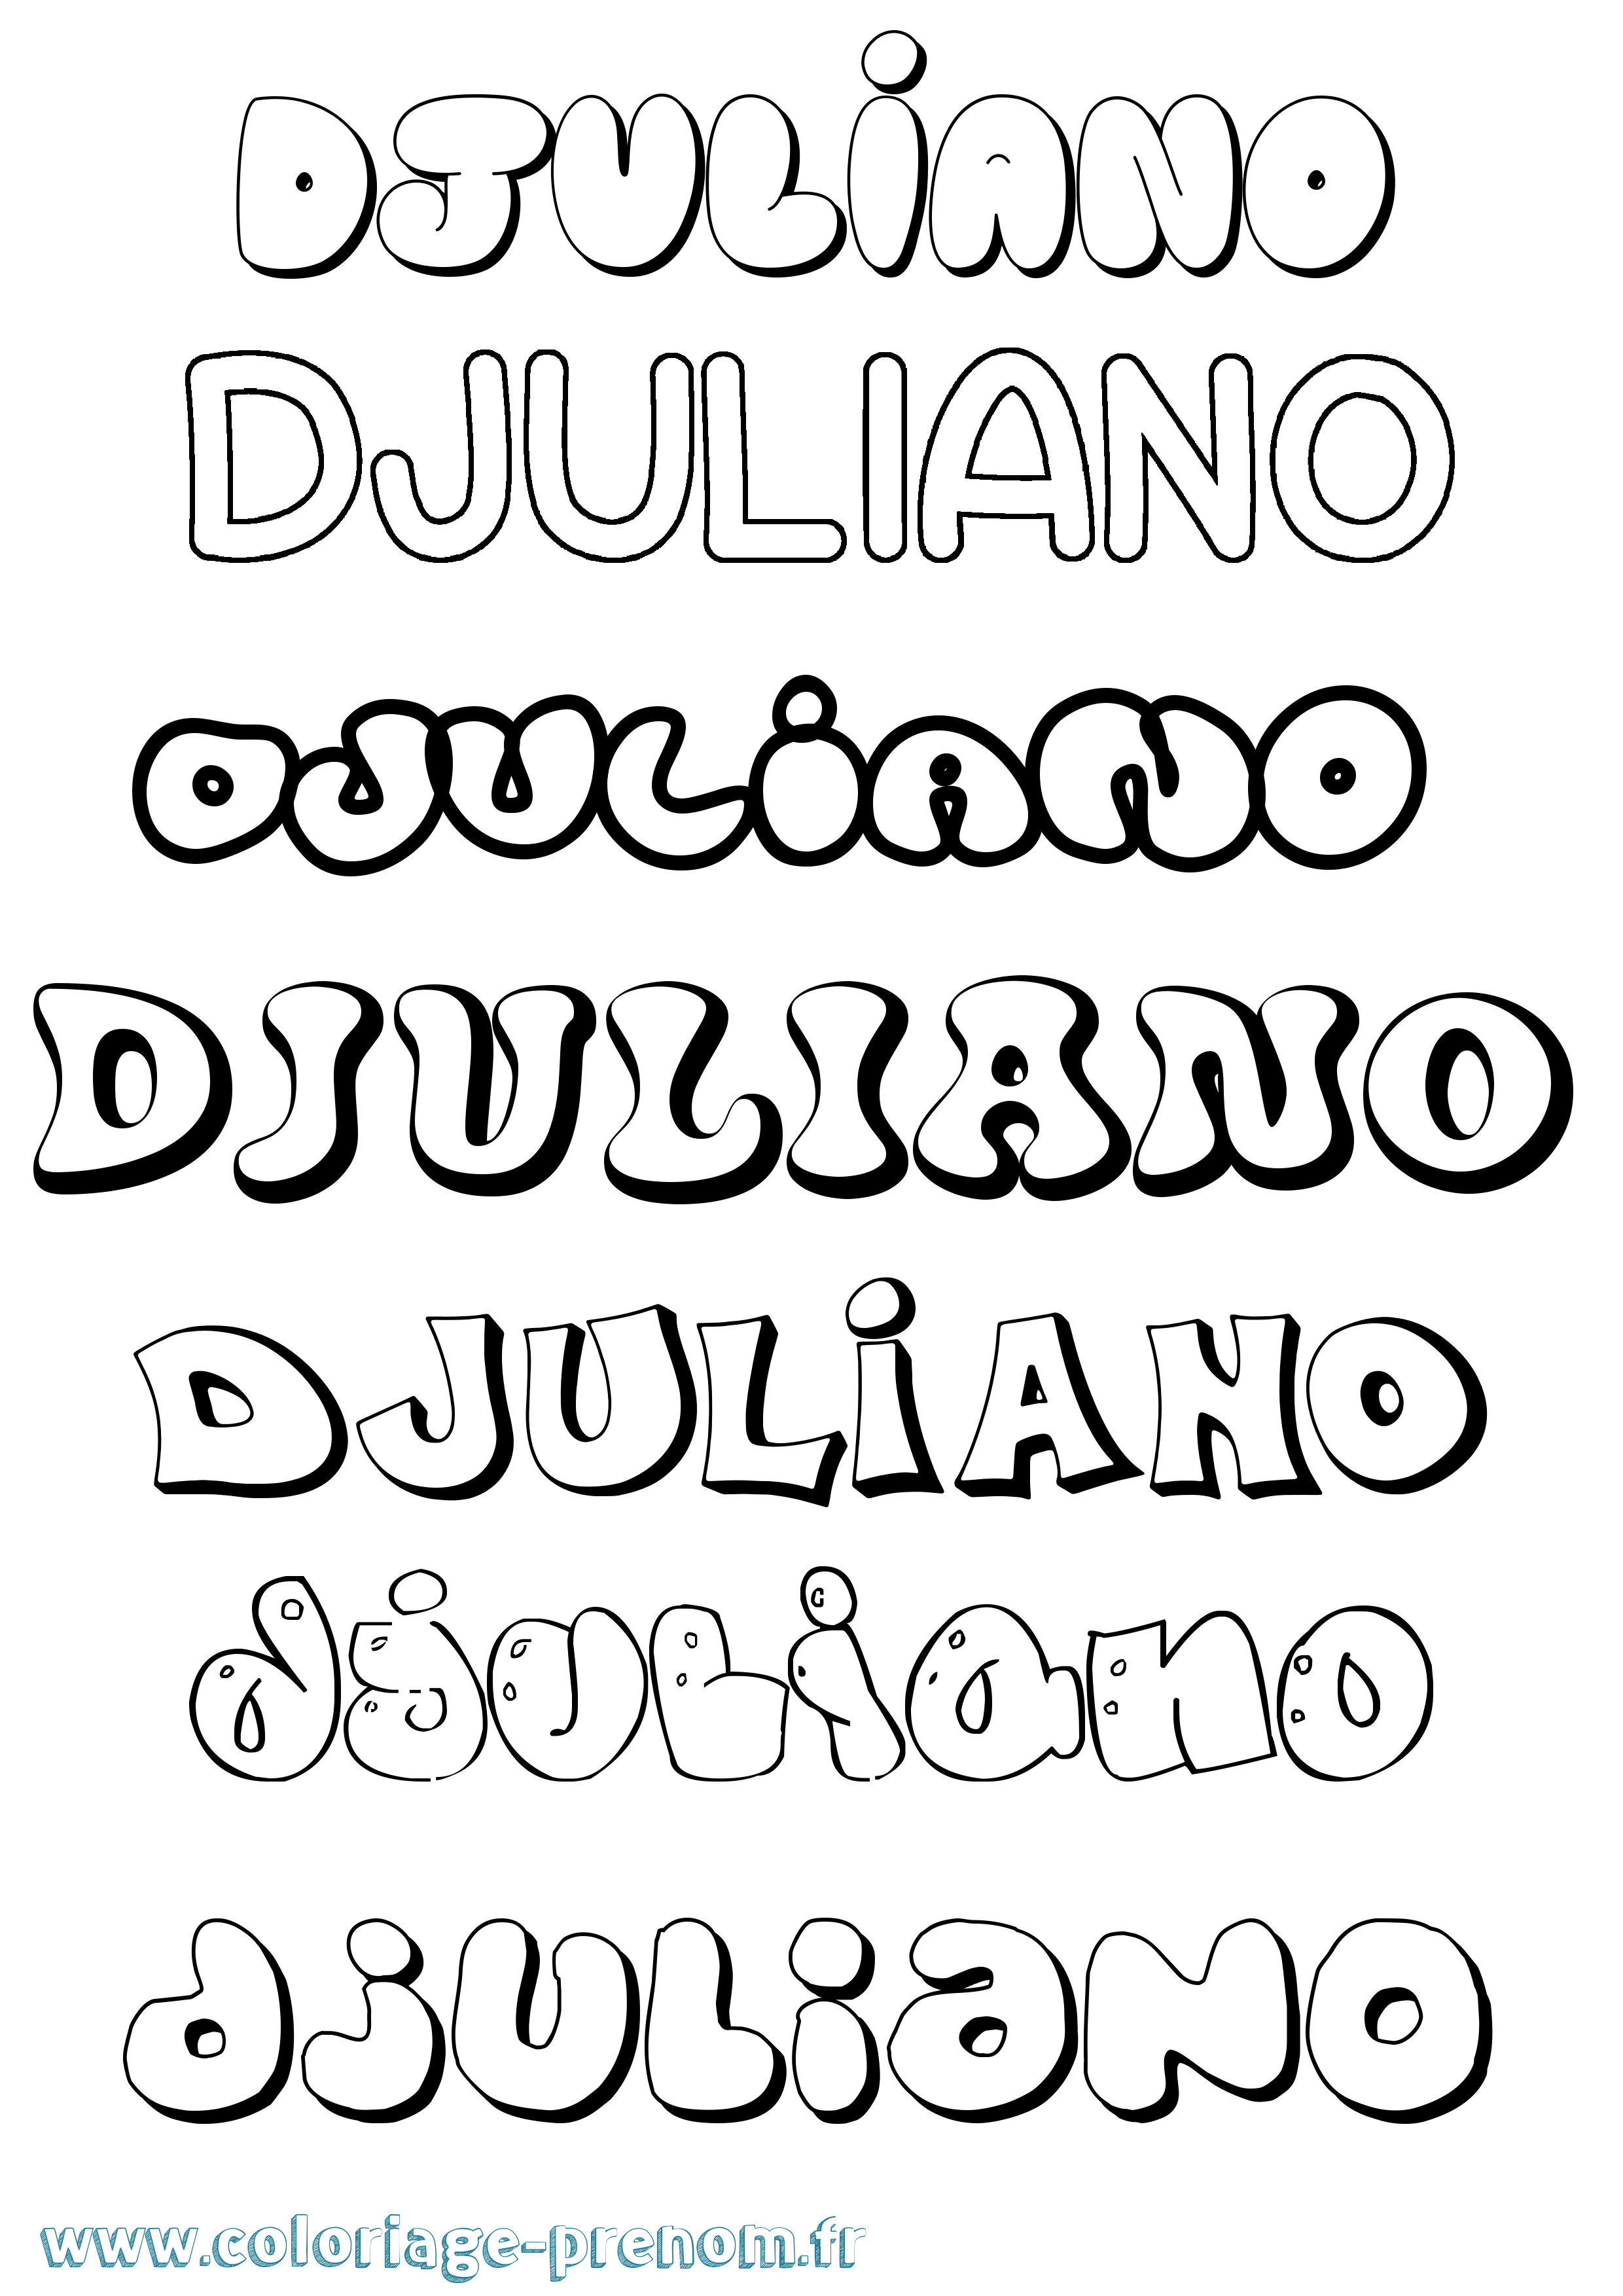 Coloriage prénom Djuliano Bubble